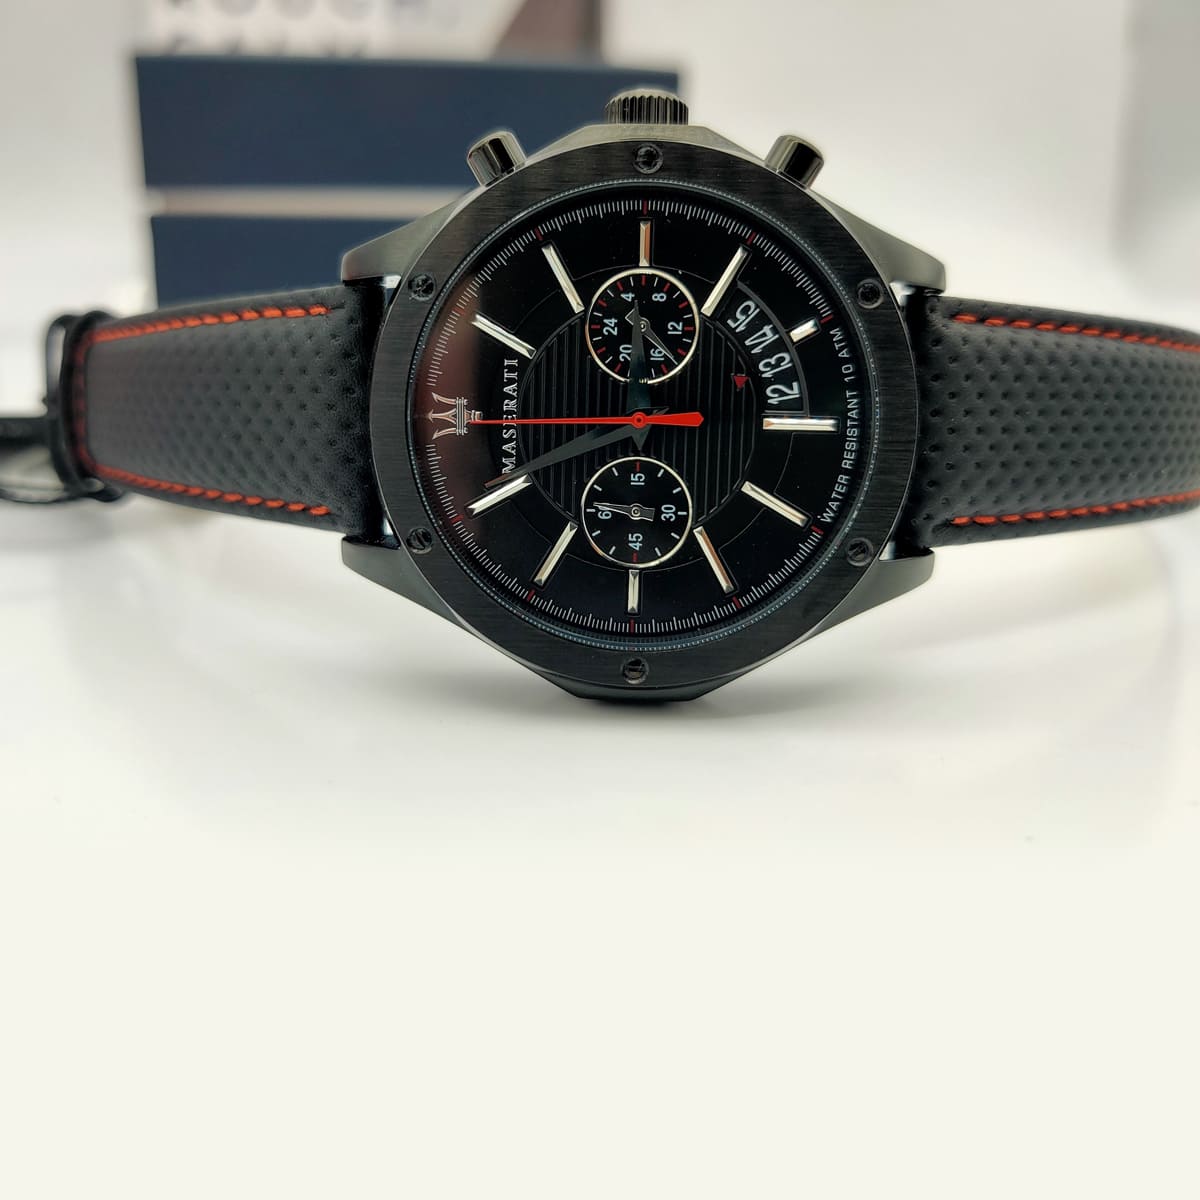 Maserati Circuito Black Dial Leather Strap Watch For Men - R8871627004